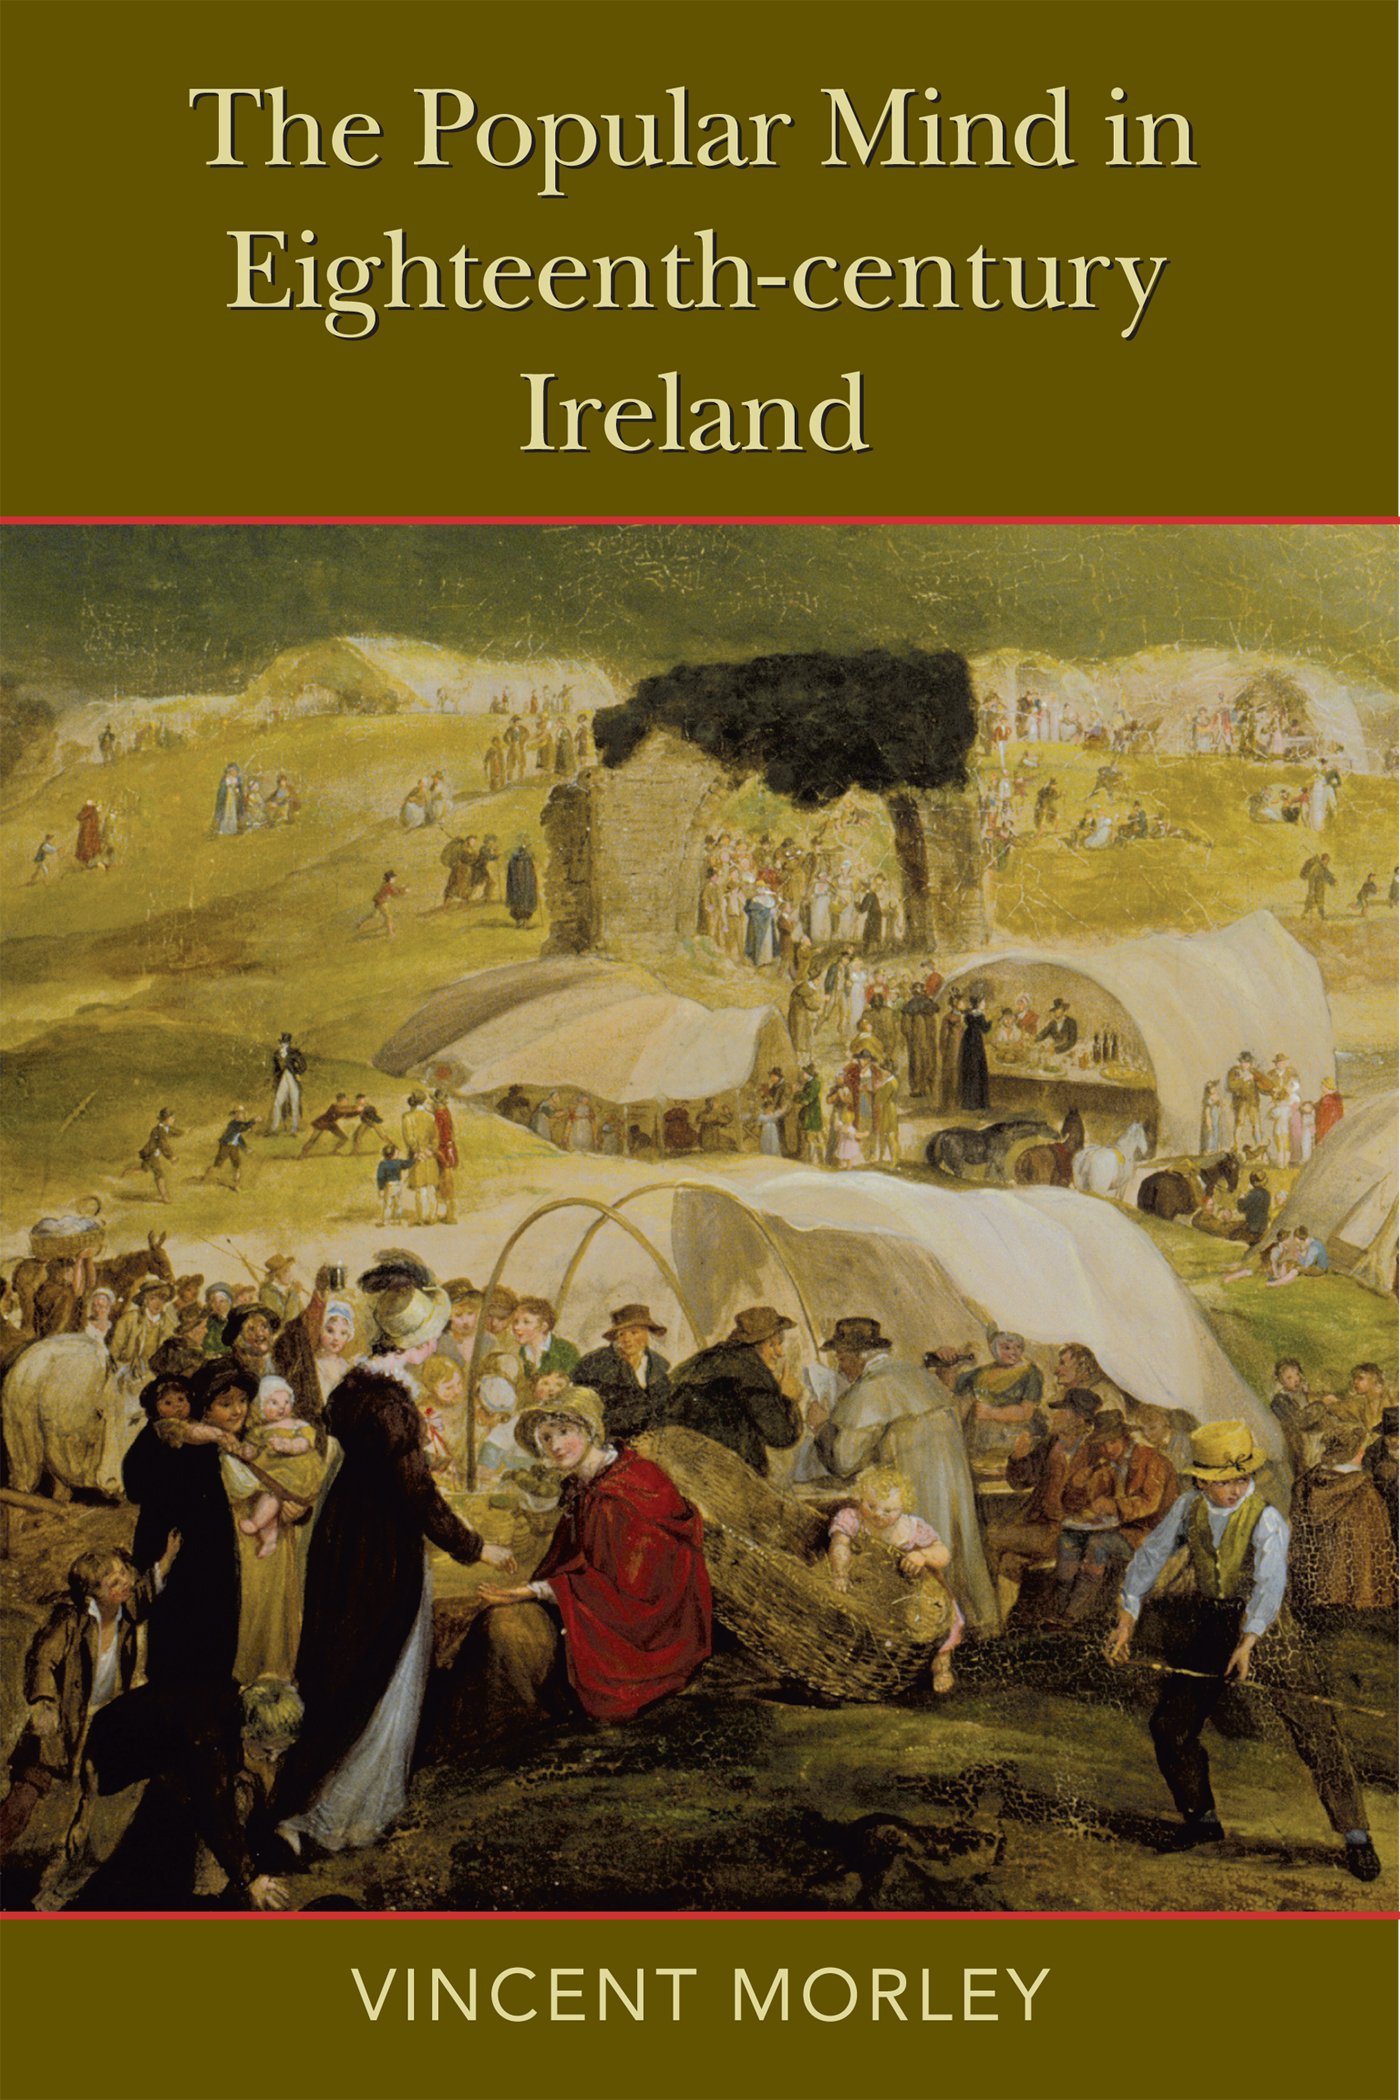 The The Popular Mind in Eighteenth-century Ireland | Vincent Morley